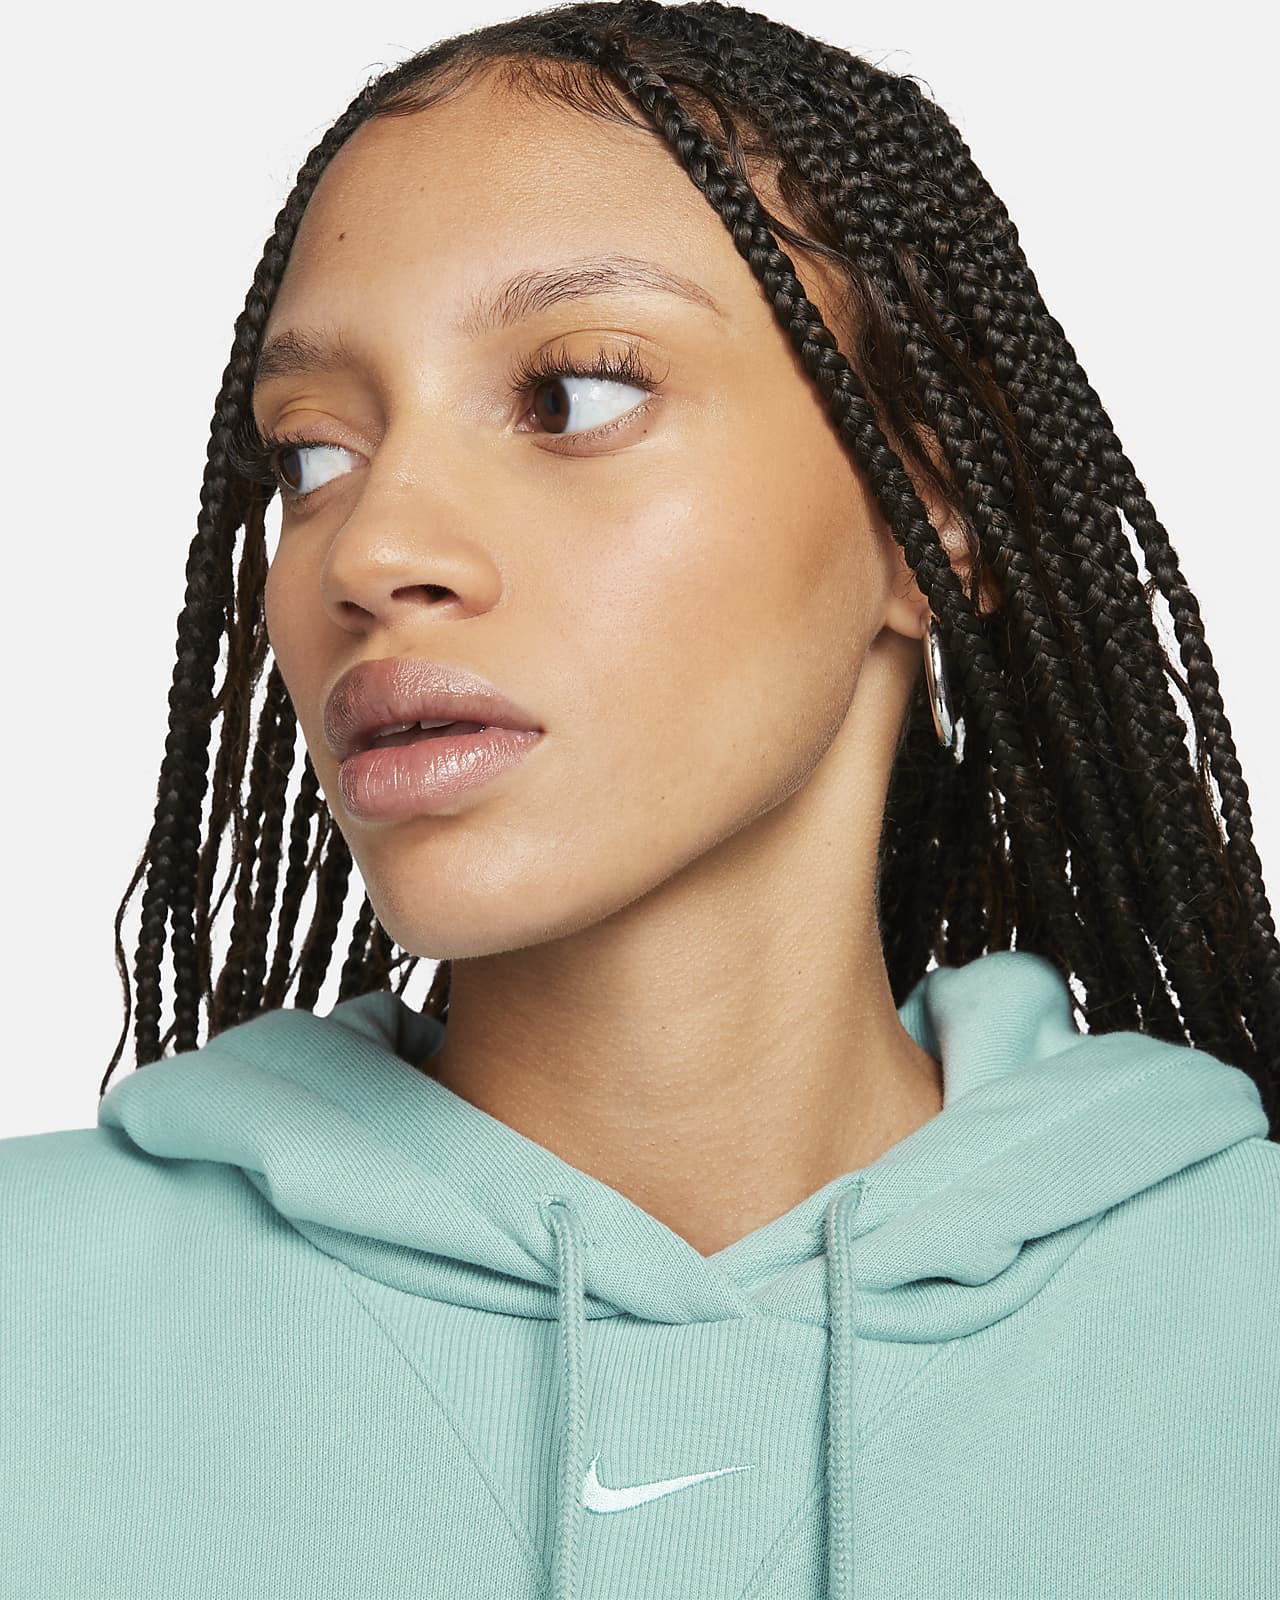 Nike Women L Sweatshirt Grey Cotton Full Zipper Hooded Activewear Top –  Retrospect Clothes